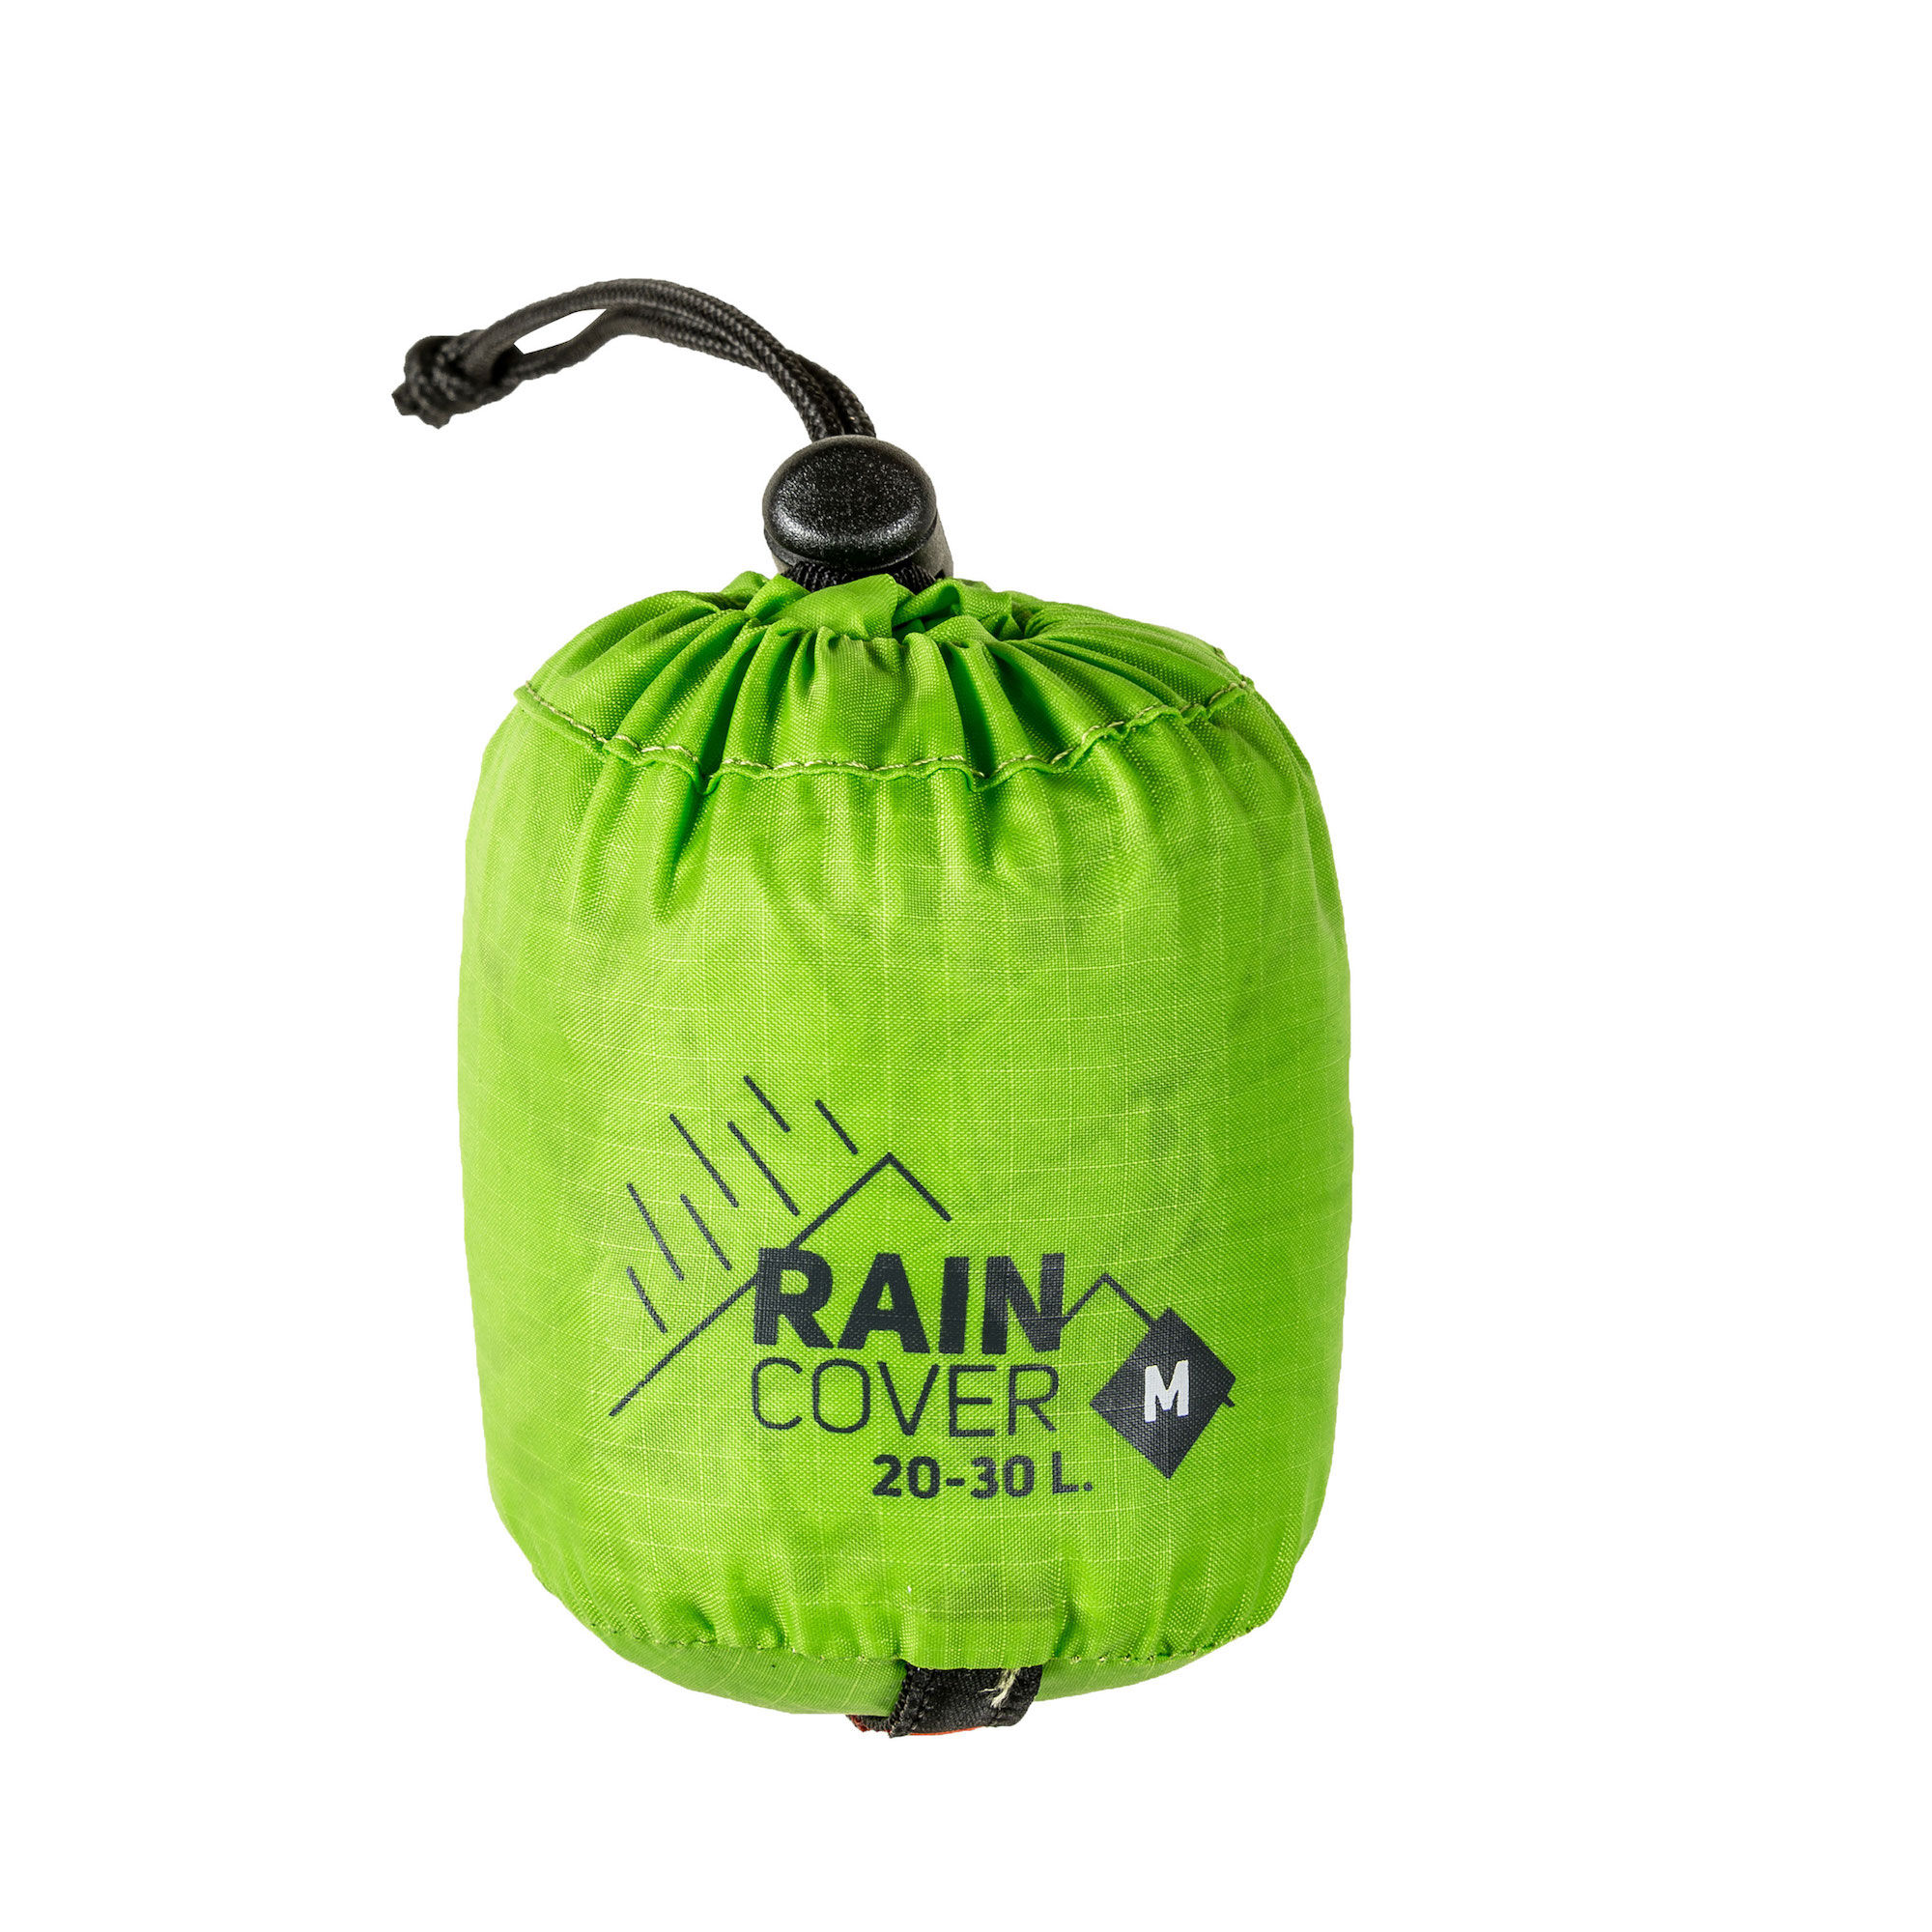 Millet Raincover "M" - (20-30L) - Protection pluie | Hardloop